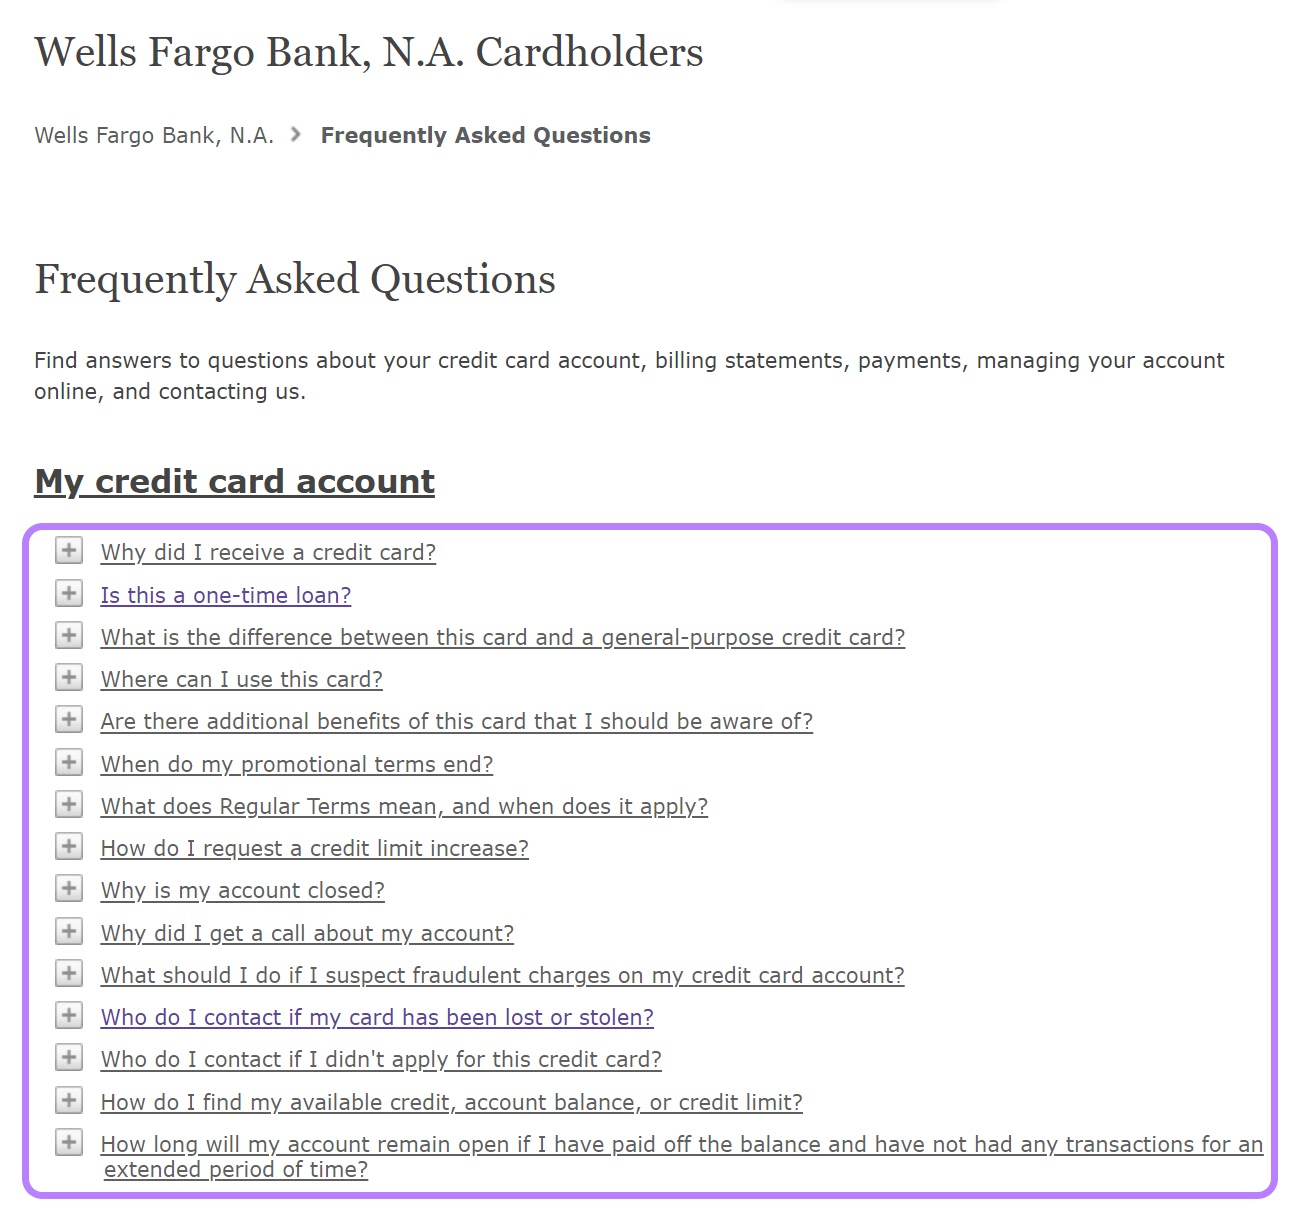 Wells Fargo’s FAQ page